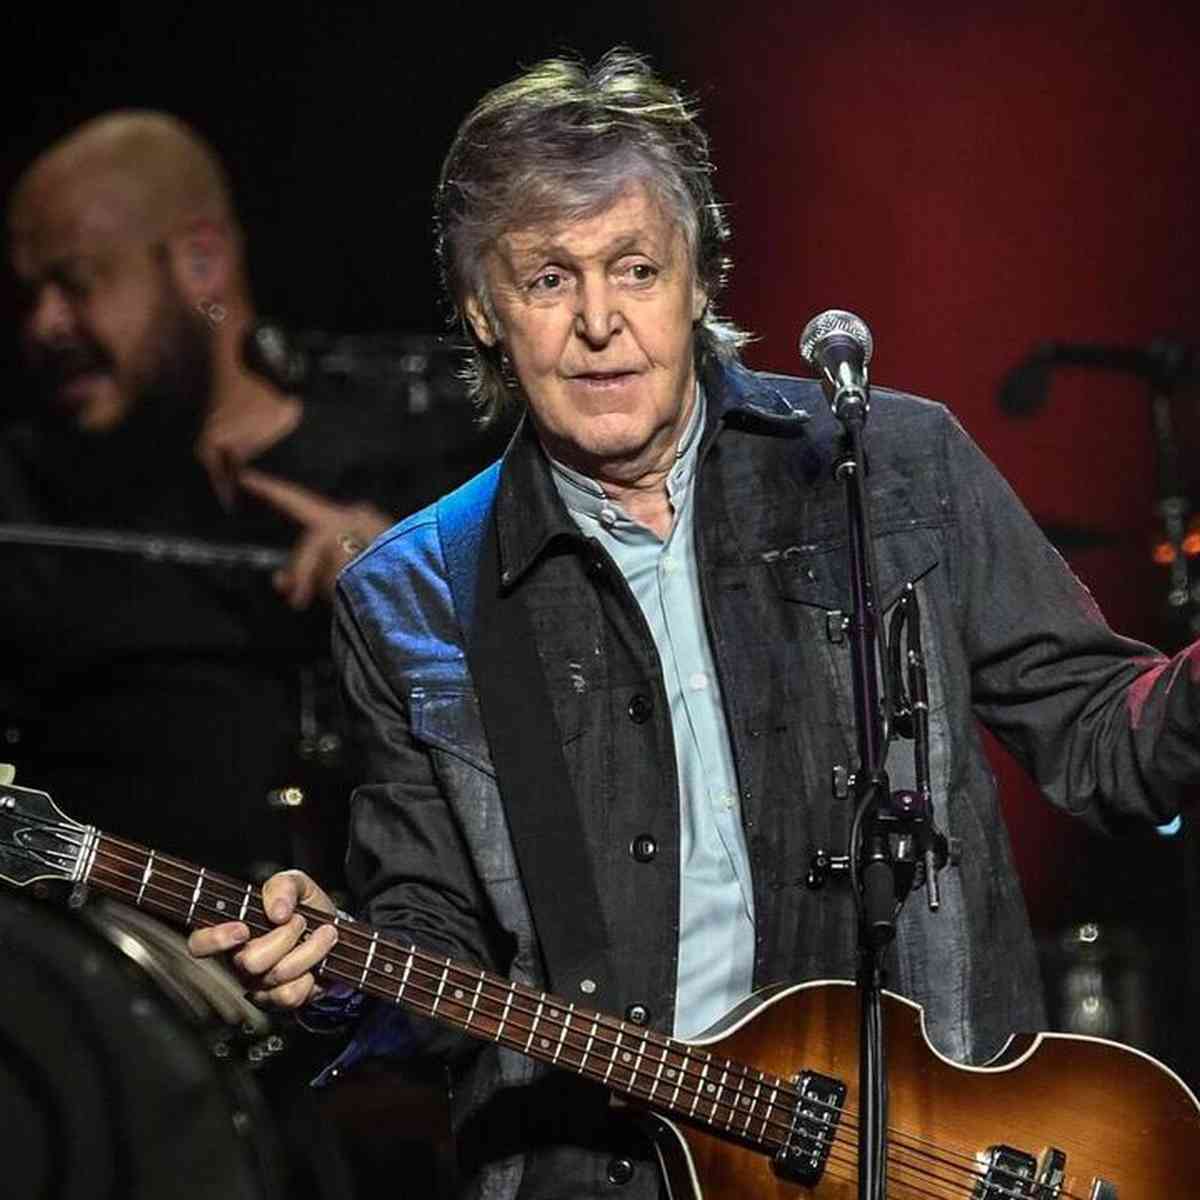 Paul McCartney anuncia 6 shows no Brasil da turnê “Got Back Tour”